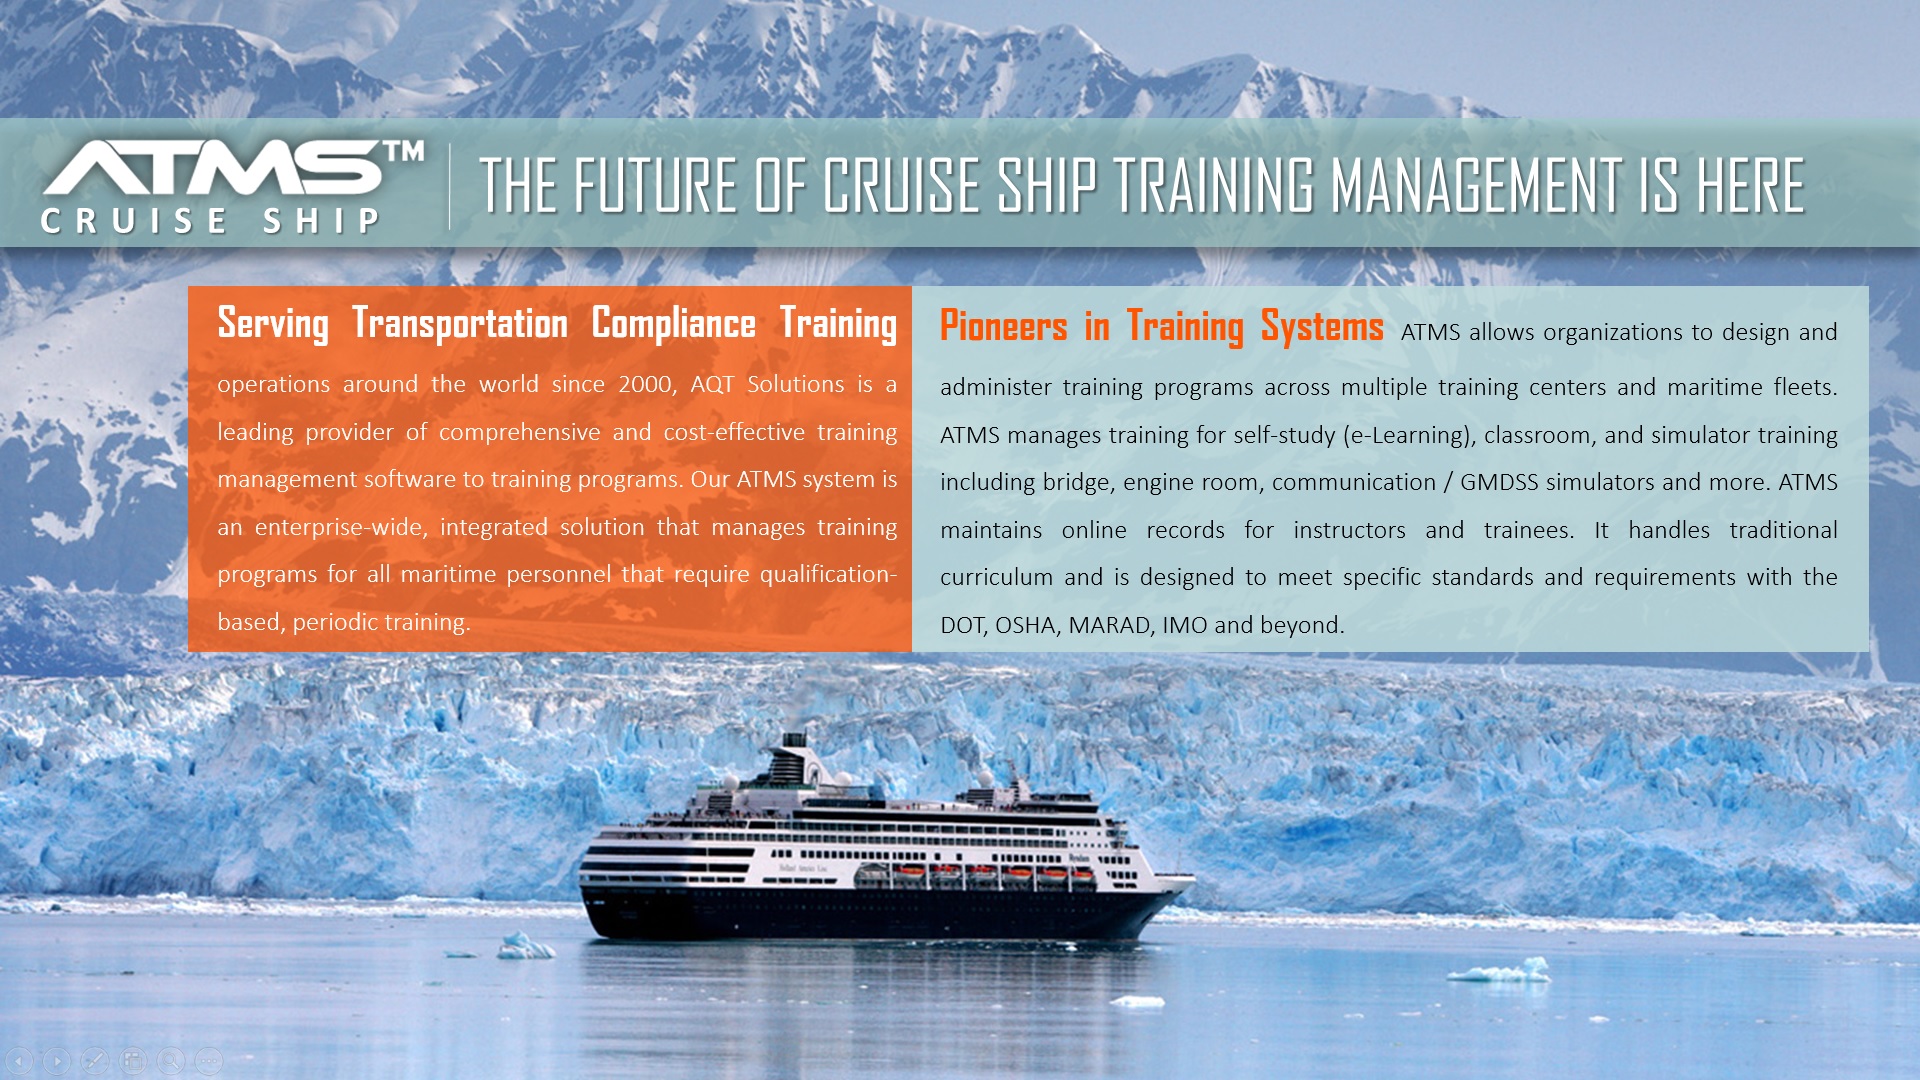 Cruise-Ship-Training-Systems-Slide-2-1